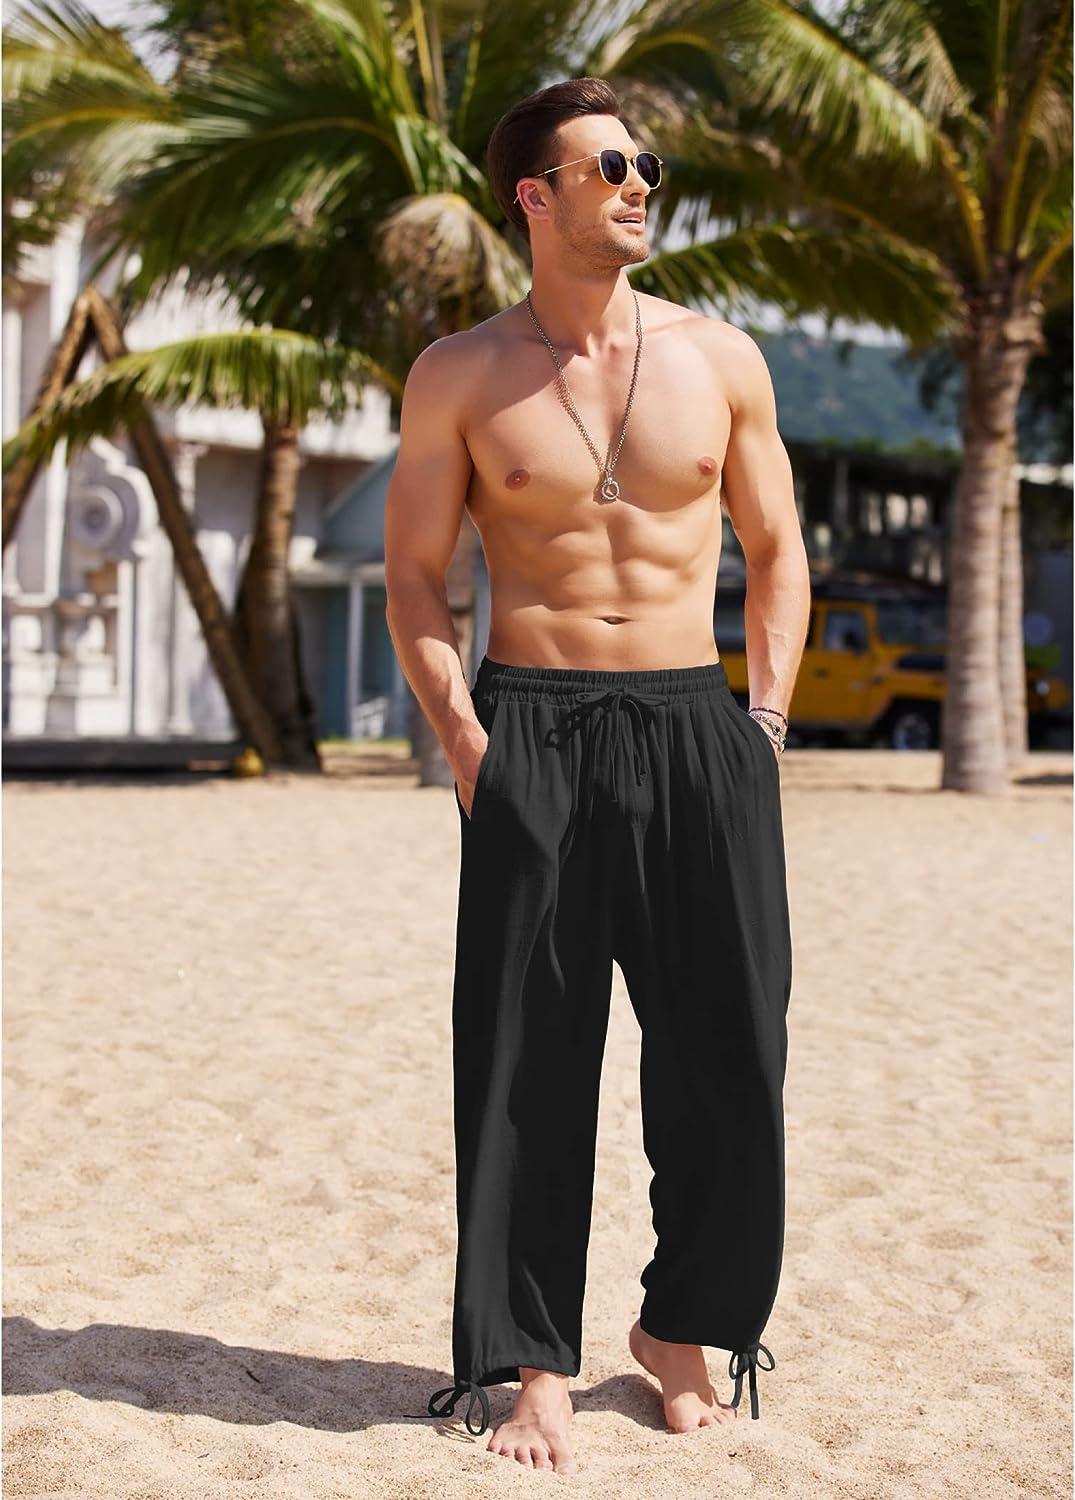 COOFANDY Men's Elastic Waist Linen Pants Beach Lightweight Pants